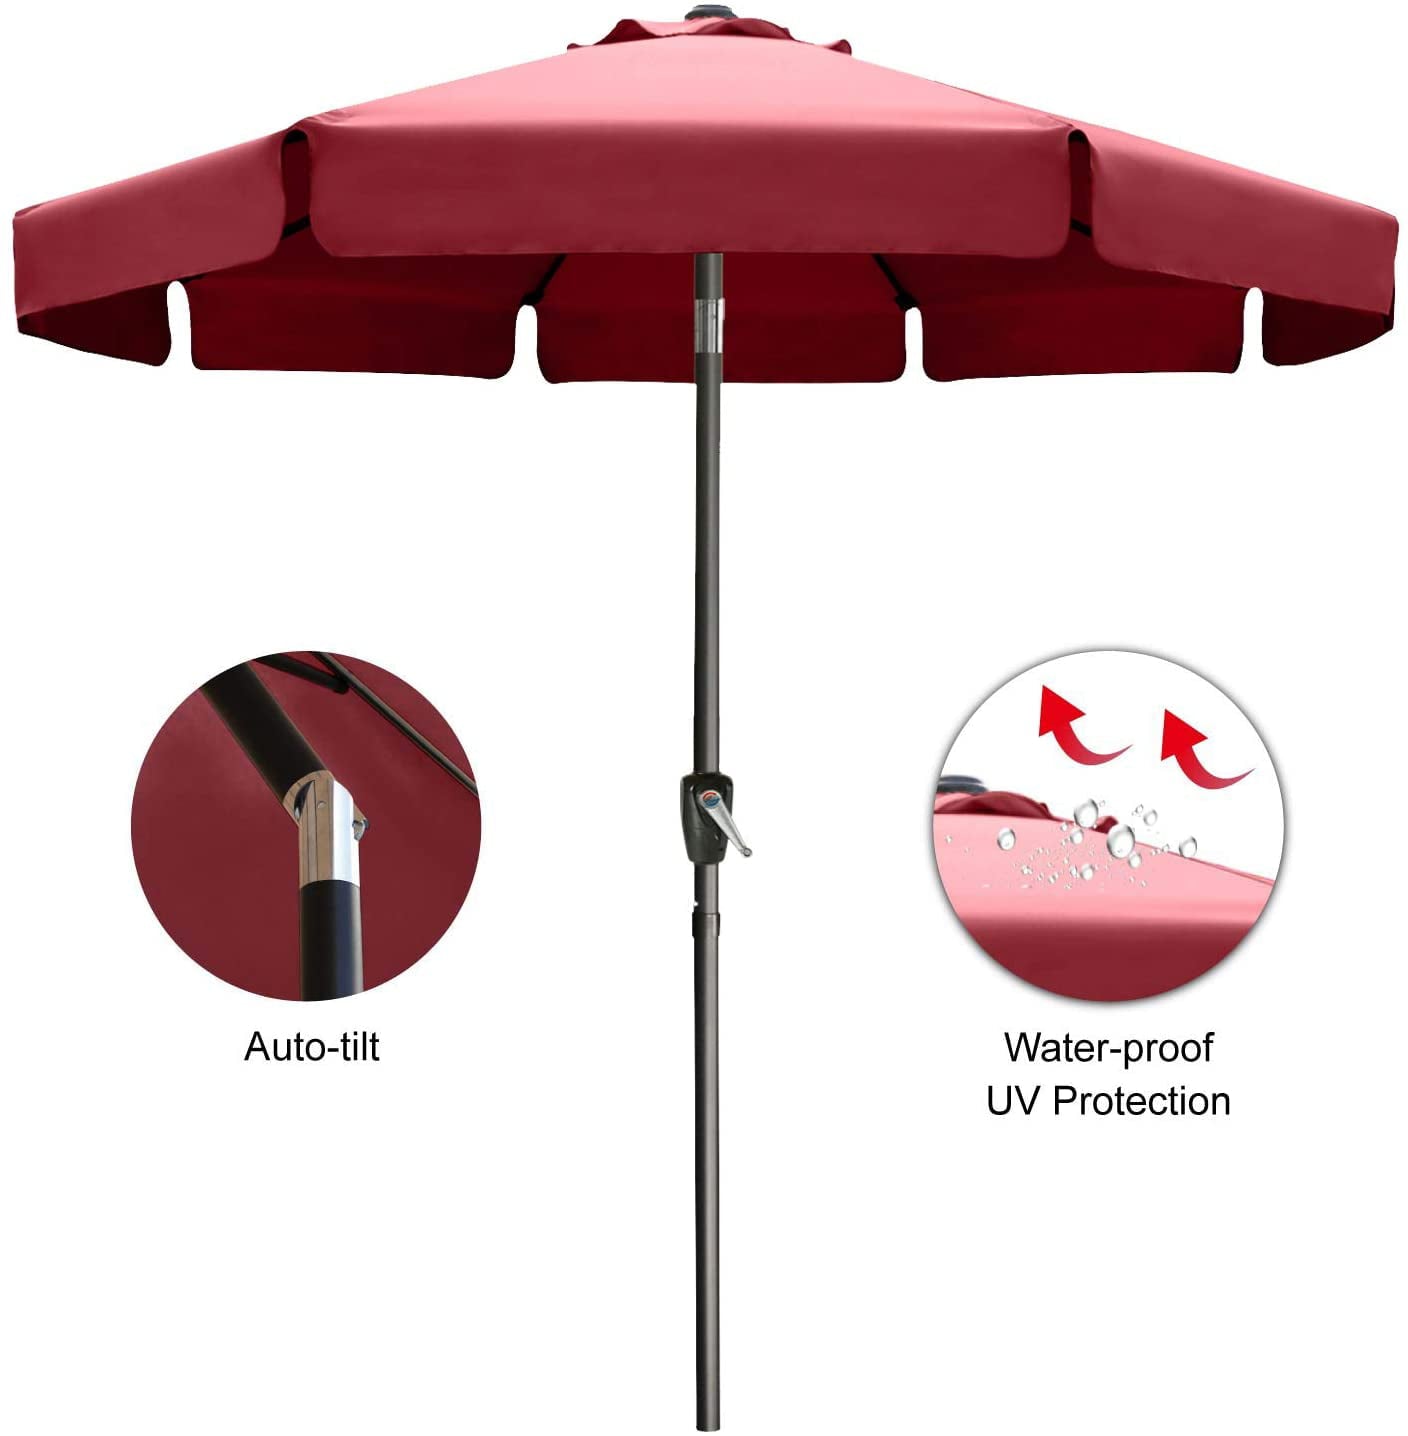 ABCCANOPY 9ft Outdoor Market Patio Umbrella with Push Button Tilt, 8 Ribs 13+Colors, Burgundy